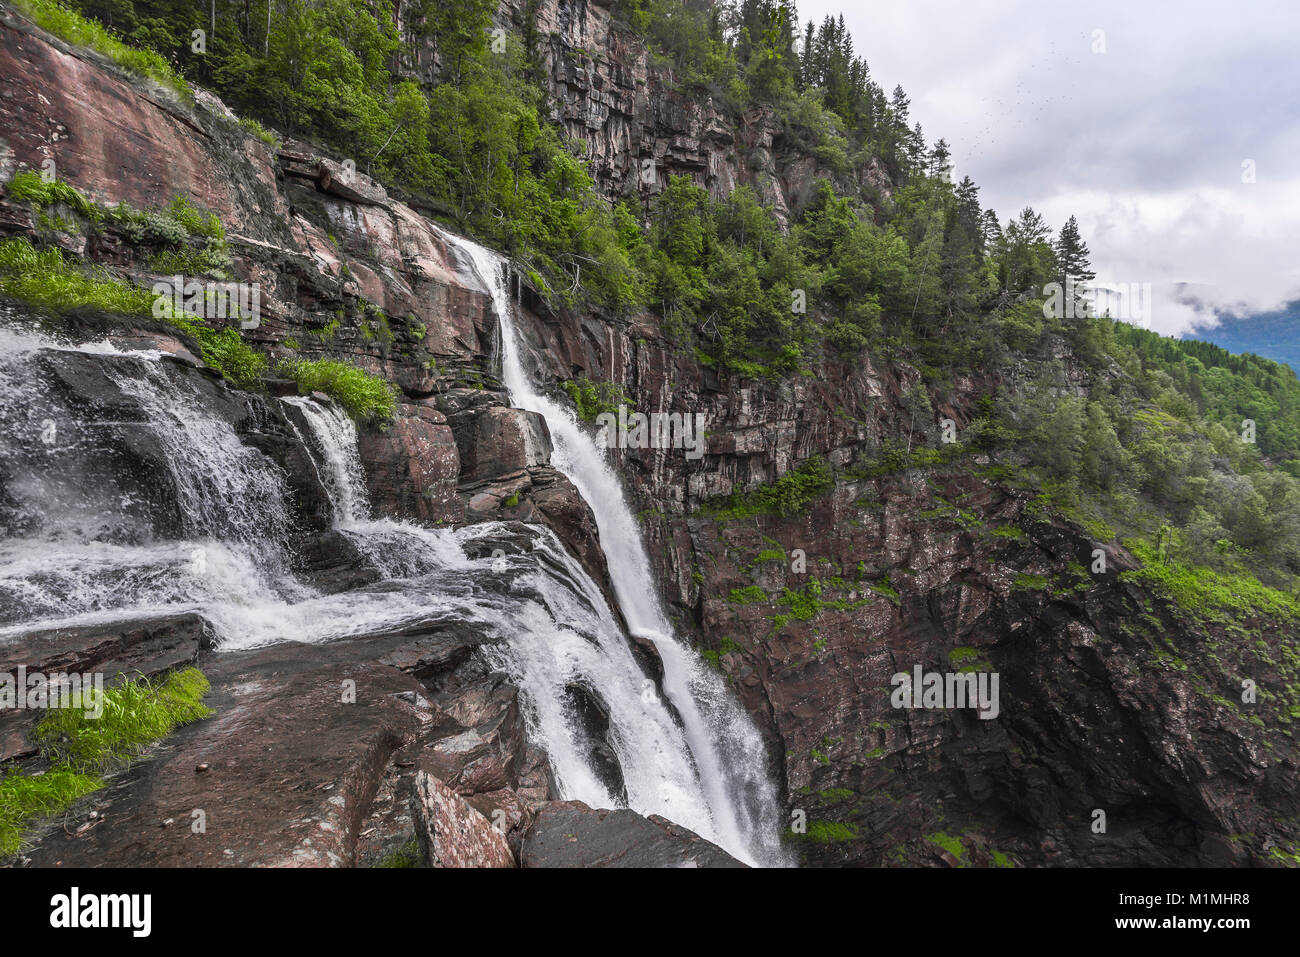 Skjervefossen Wasserfall in der Nähe von Granvin, Bezirk Hardanger, Norwegen, Skandinavien, oberer Abschnitt, Cascade in wilde und raue Landschaft Stockfoto